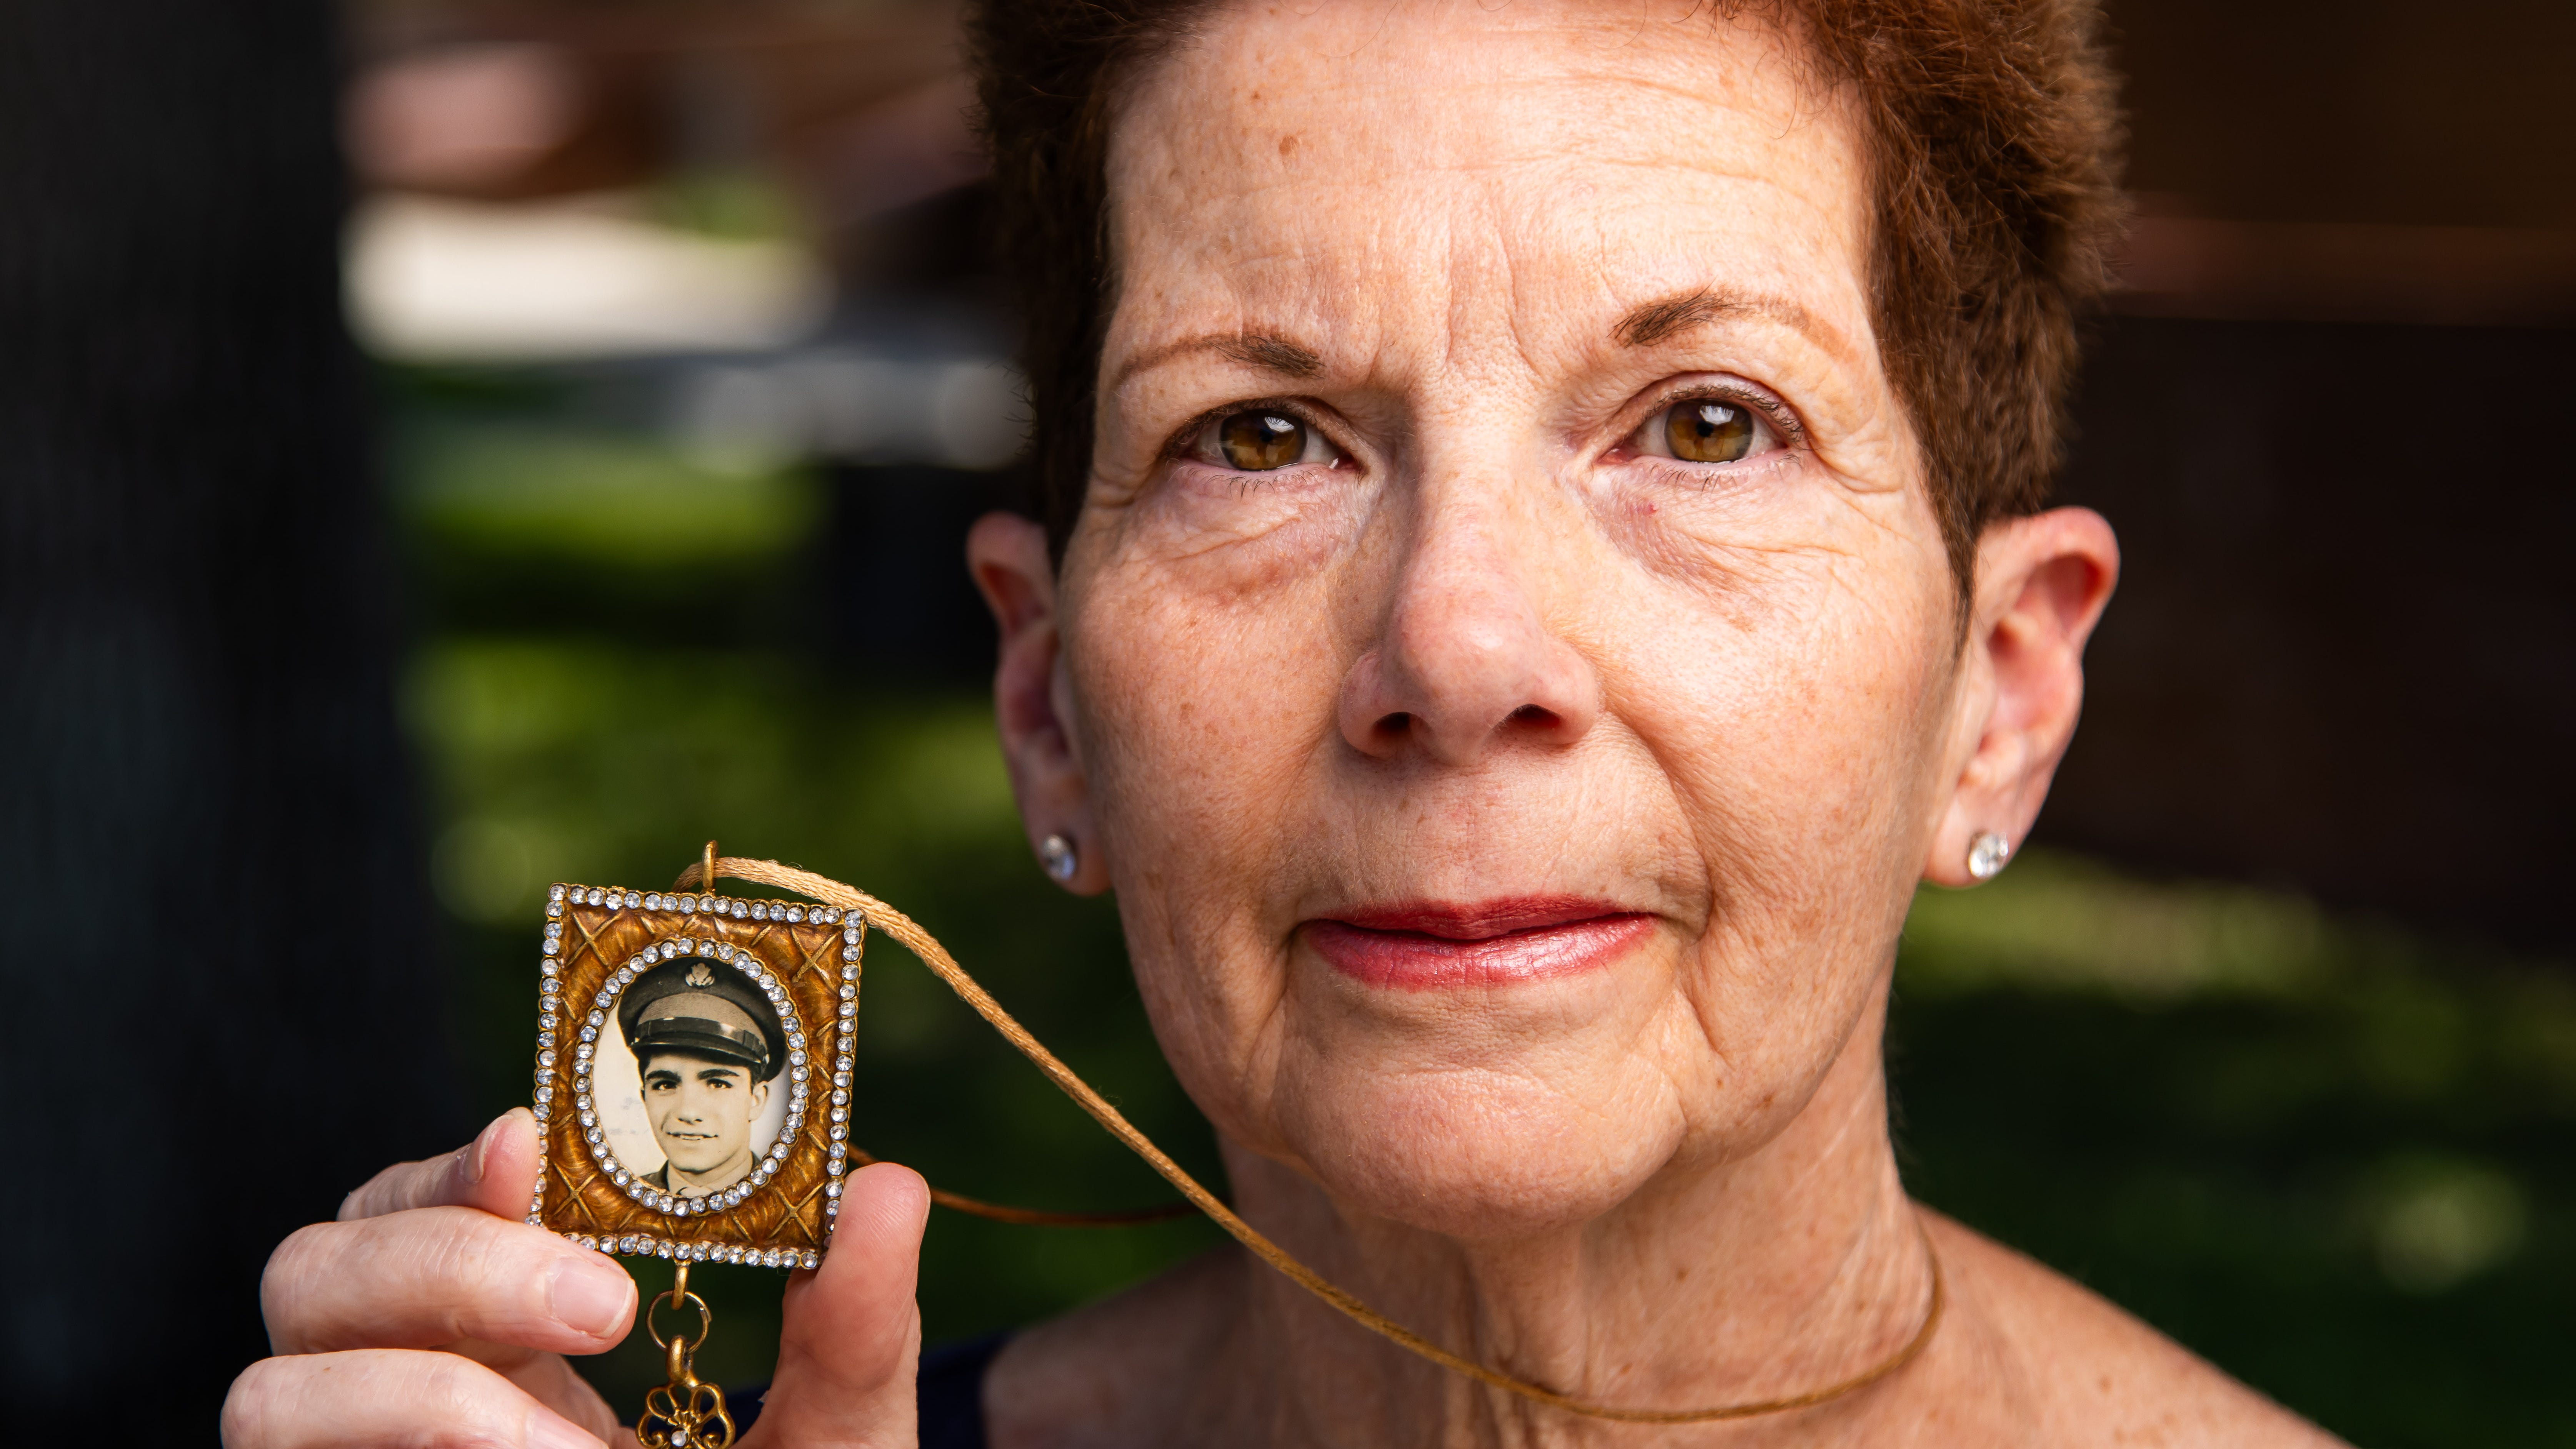 Plaque at Ocala veterans park memorializes Korean War soldier